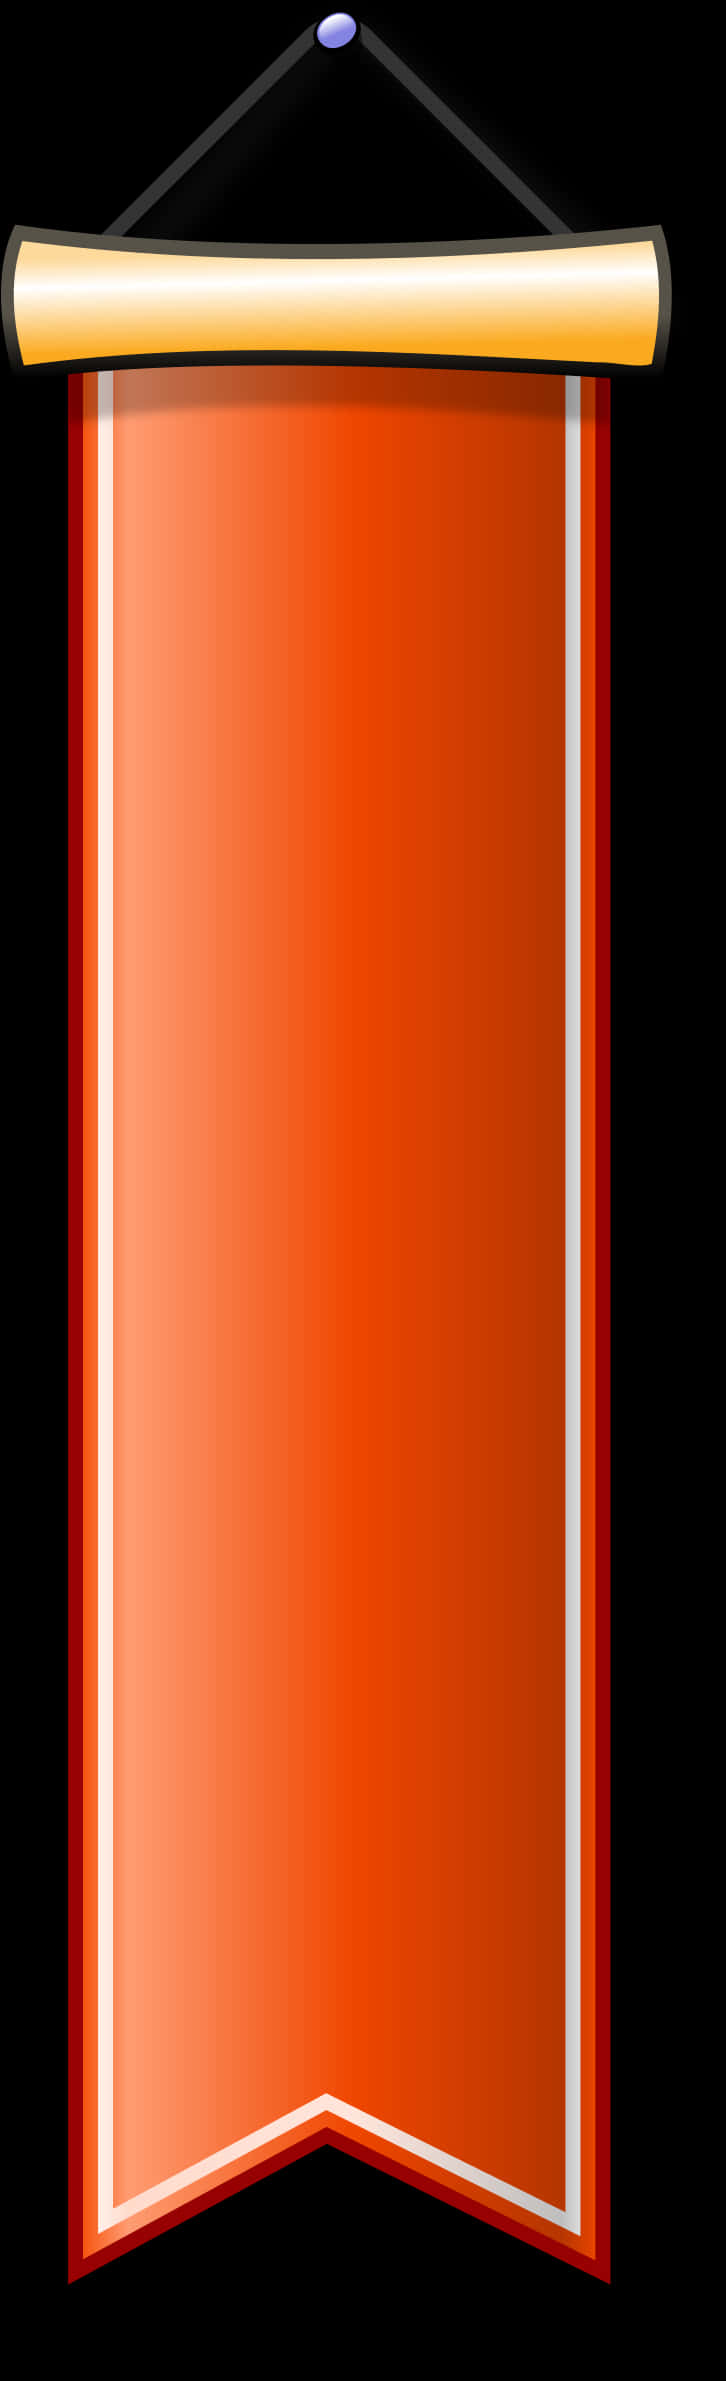 A Close-up Of An Orange Battery